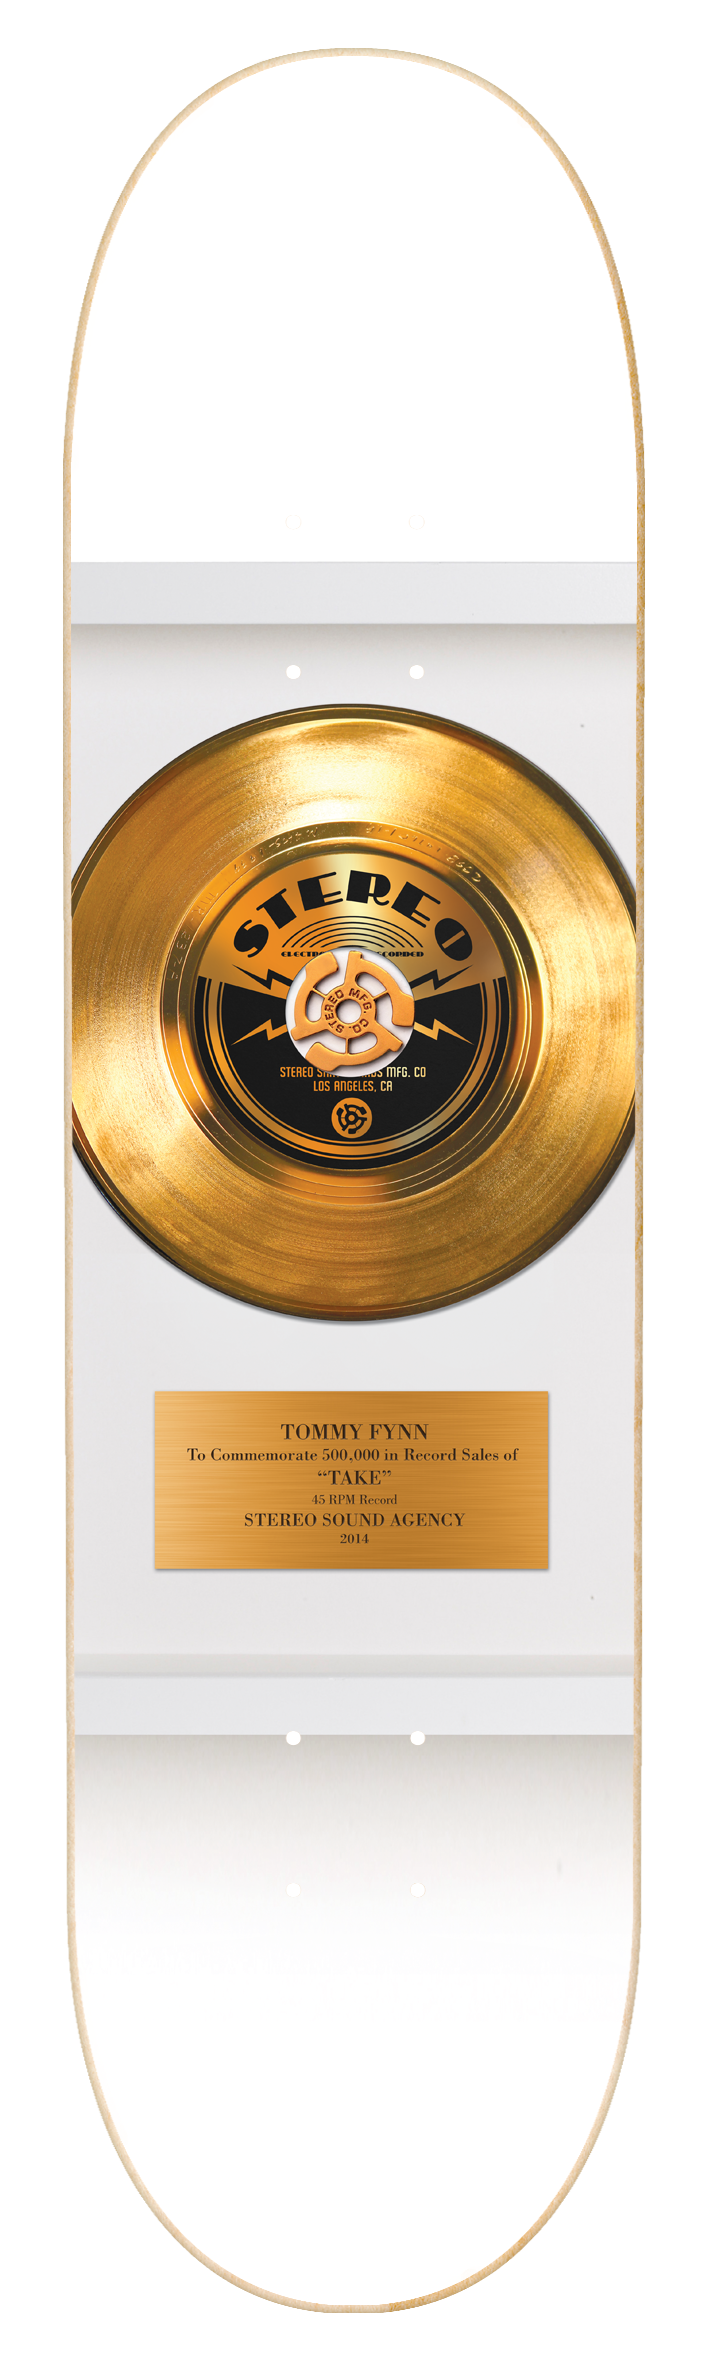 fynn-gold-record-mockup.png